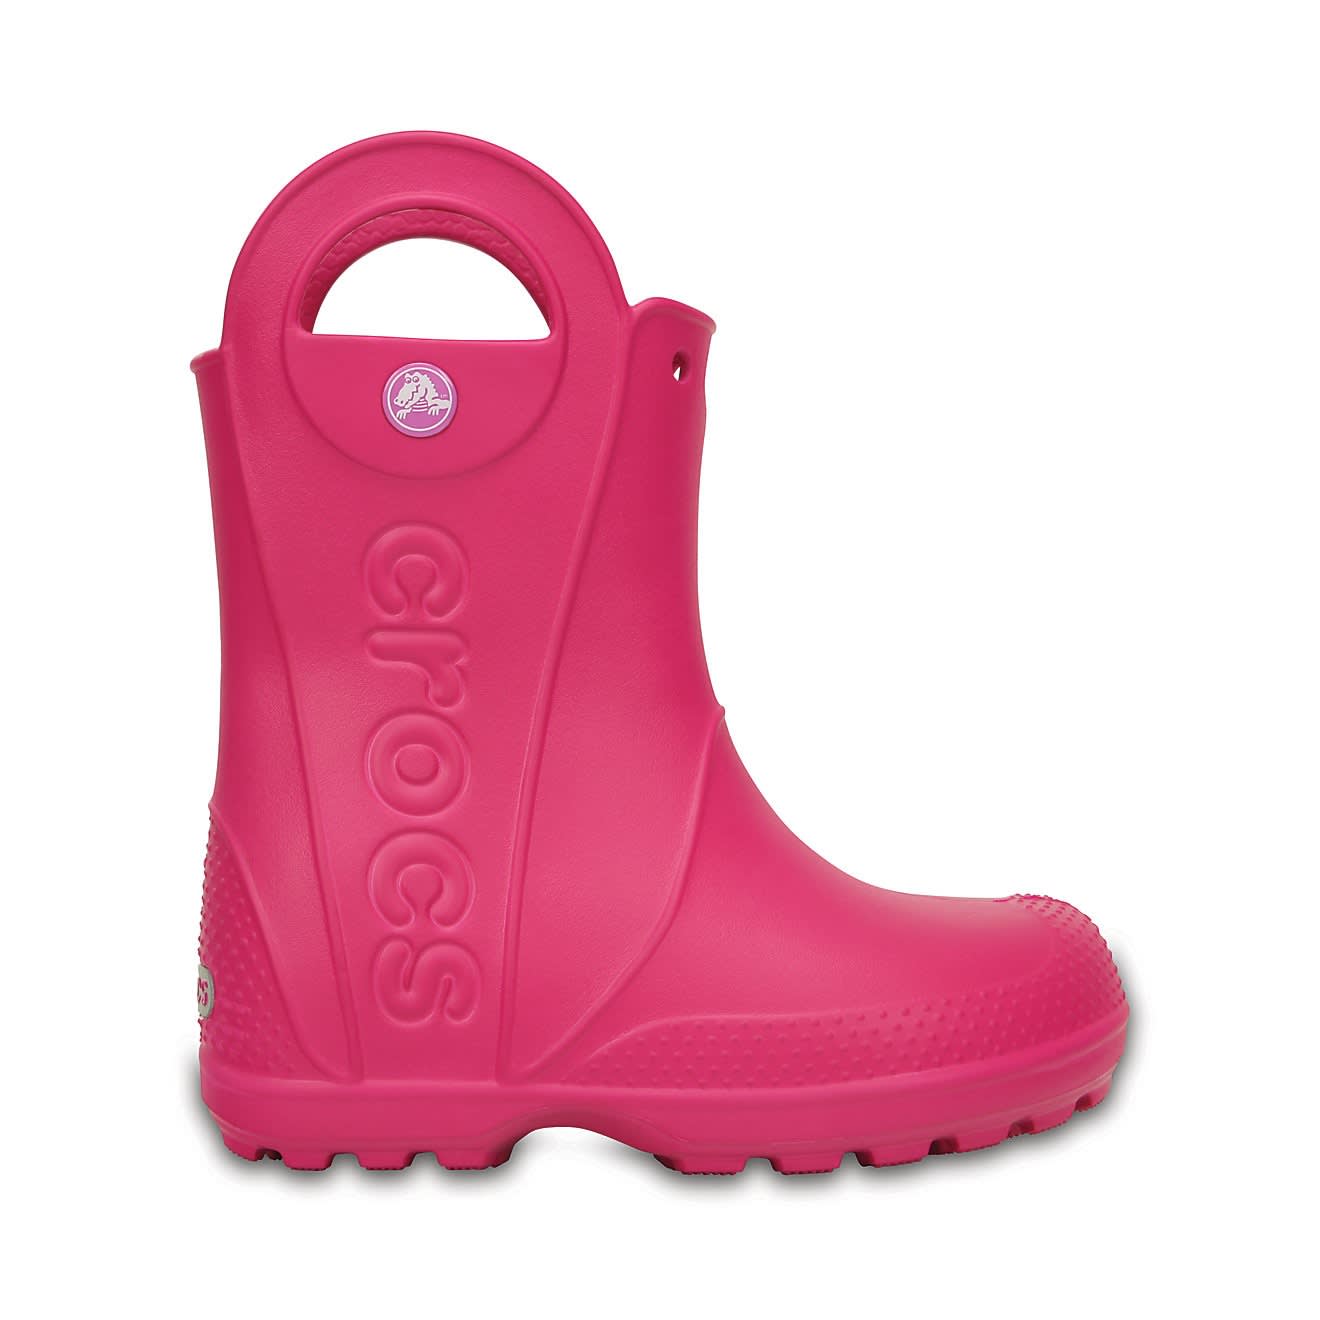 Køb Crocs Handle It Rain Boot fra